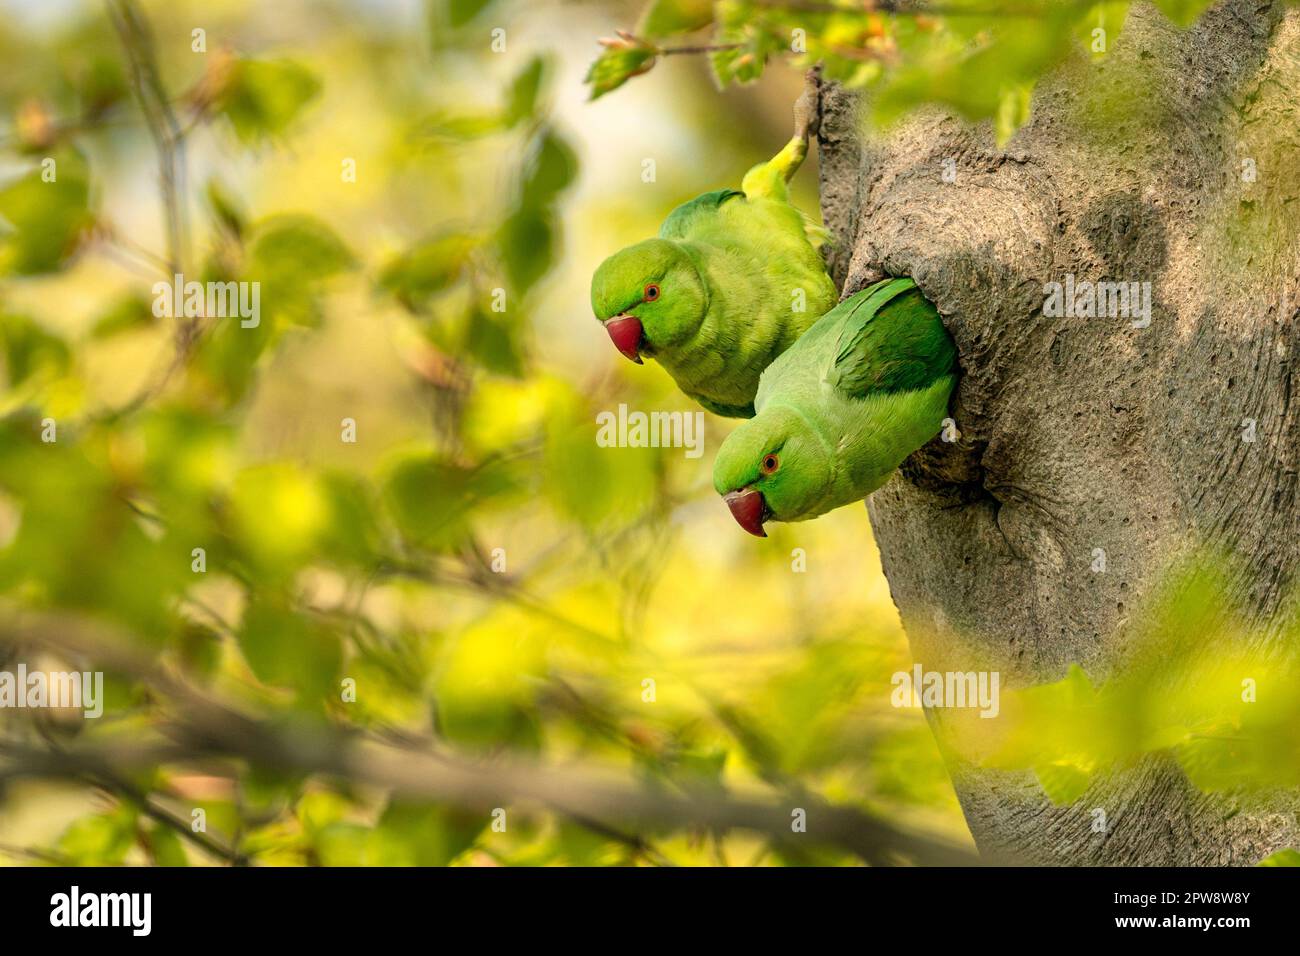 The Netherlands, Õs-Graveland, Õs-Gravelandse Buitenplaatsen, Rural Estate Hilverbeek. Spring. Rose-ringed parakeet or ring-necked parakeet. (Psittacu Stock Photo